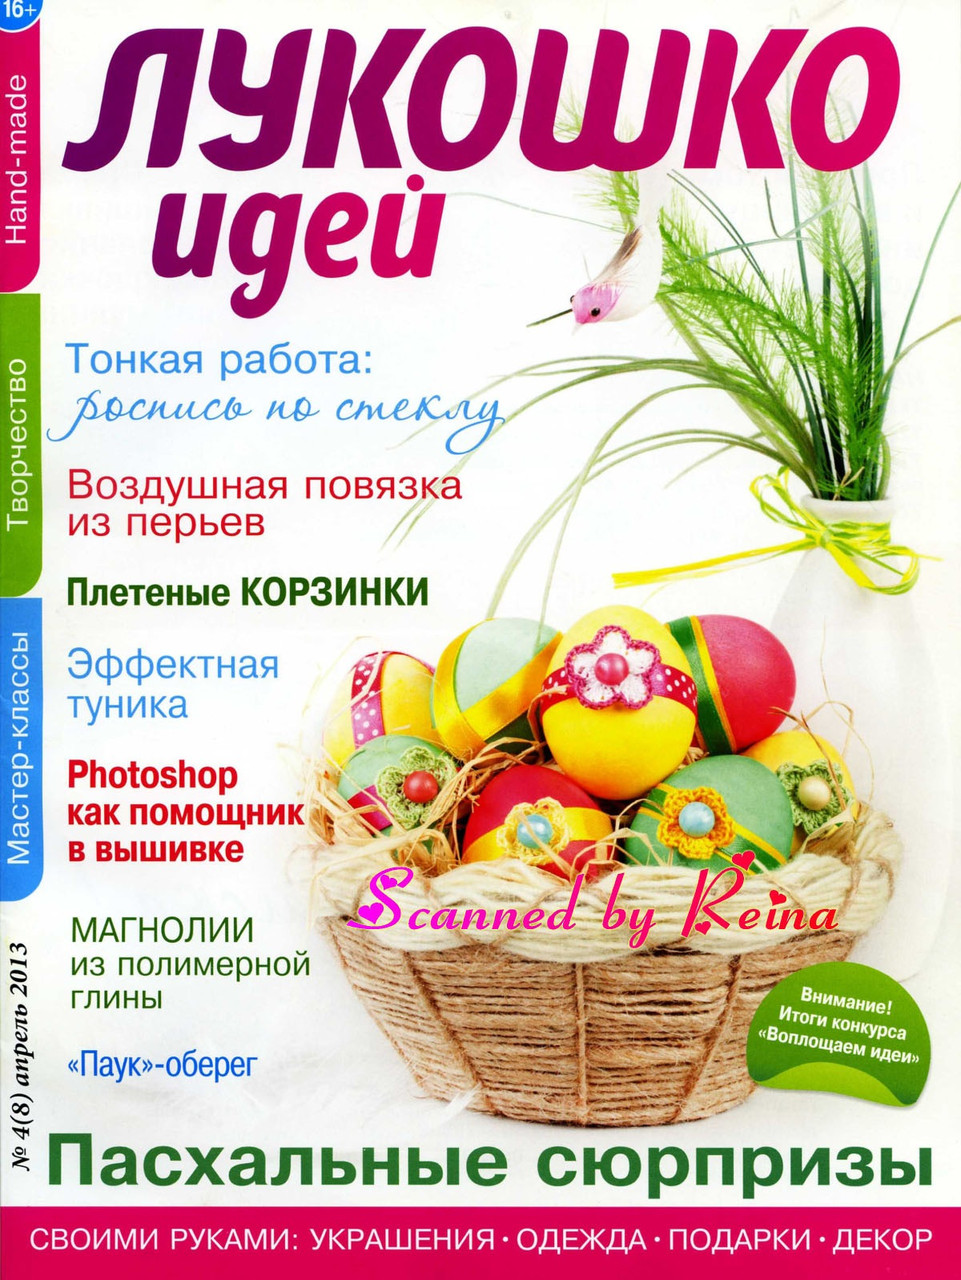 «Лукошко идей» 4 (8) апрель 2013